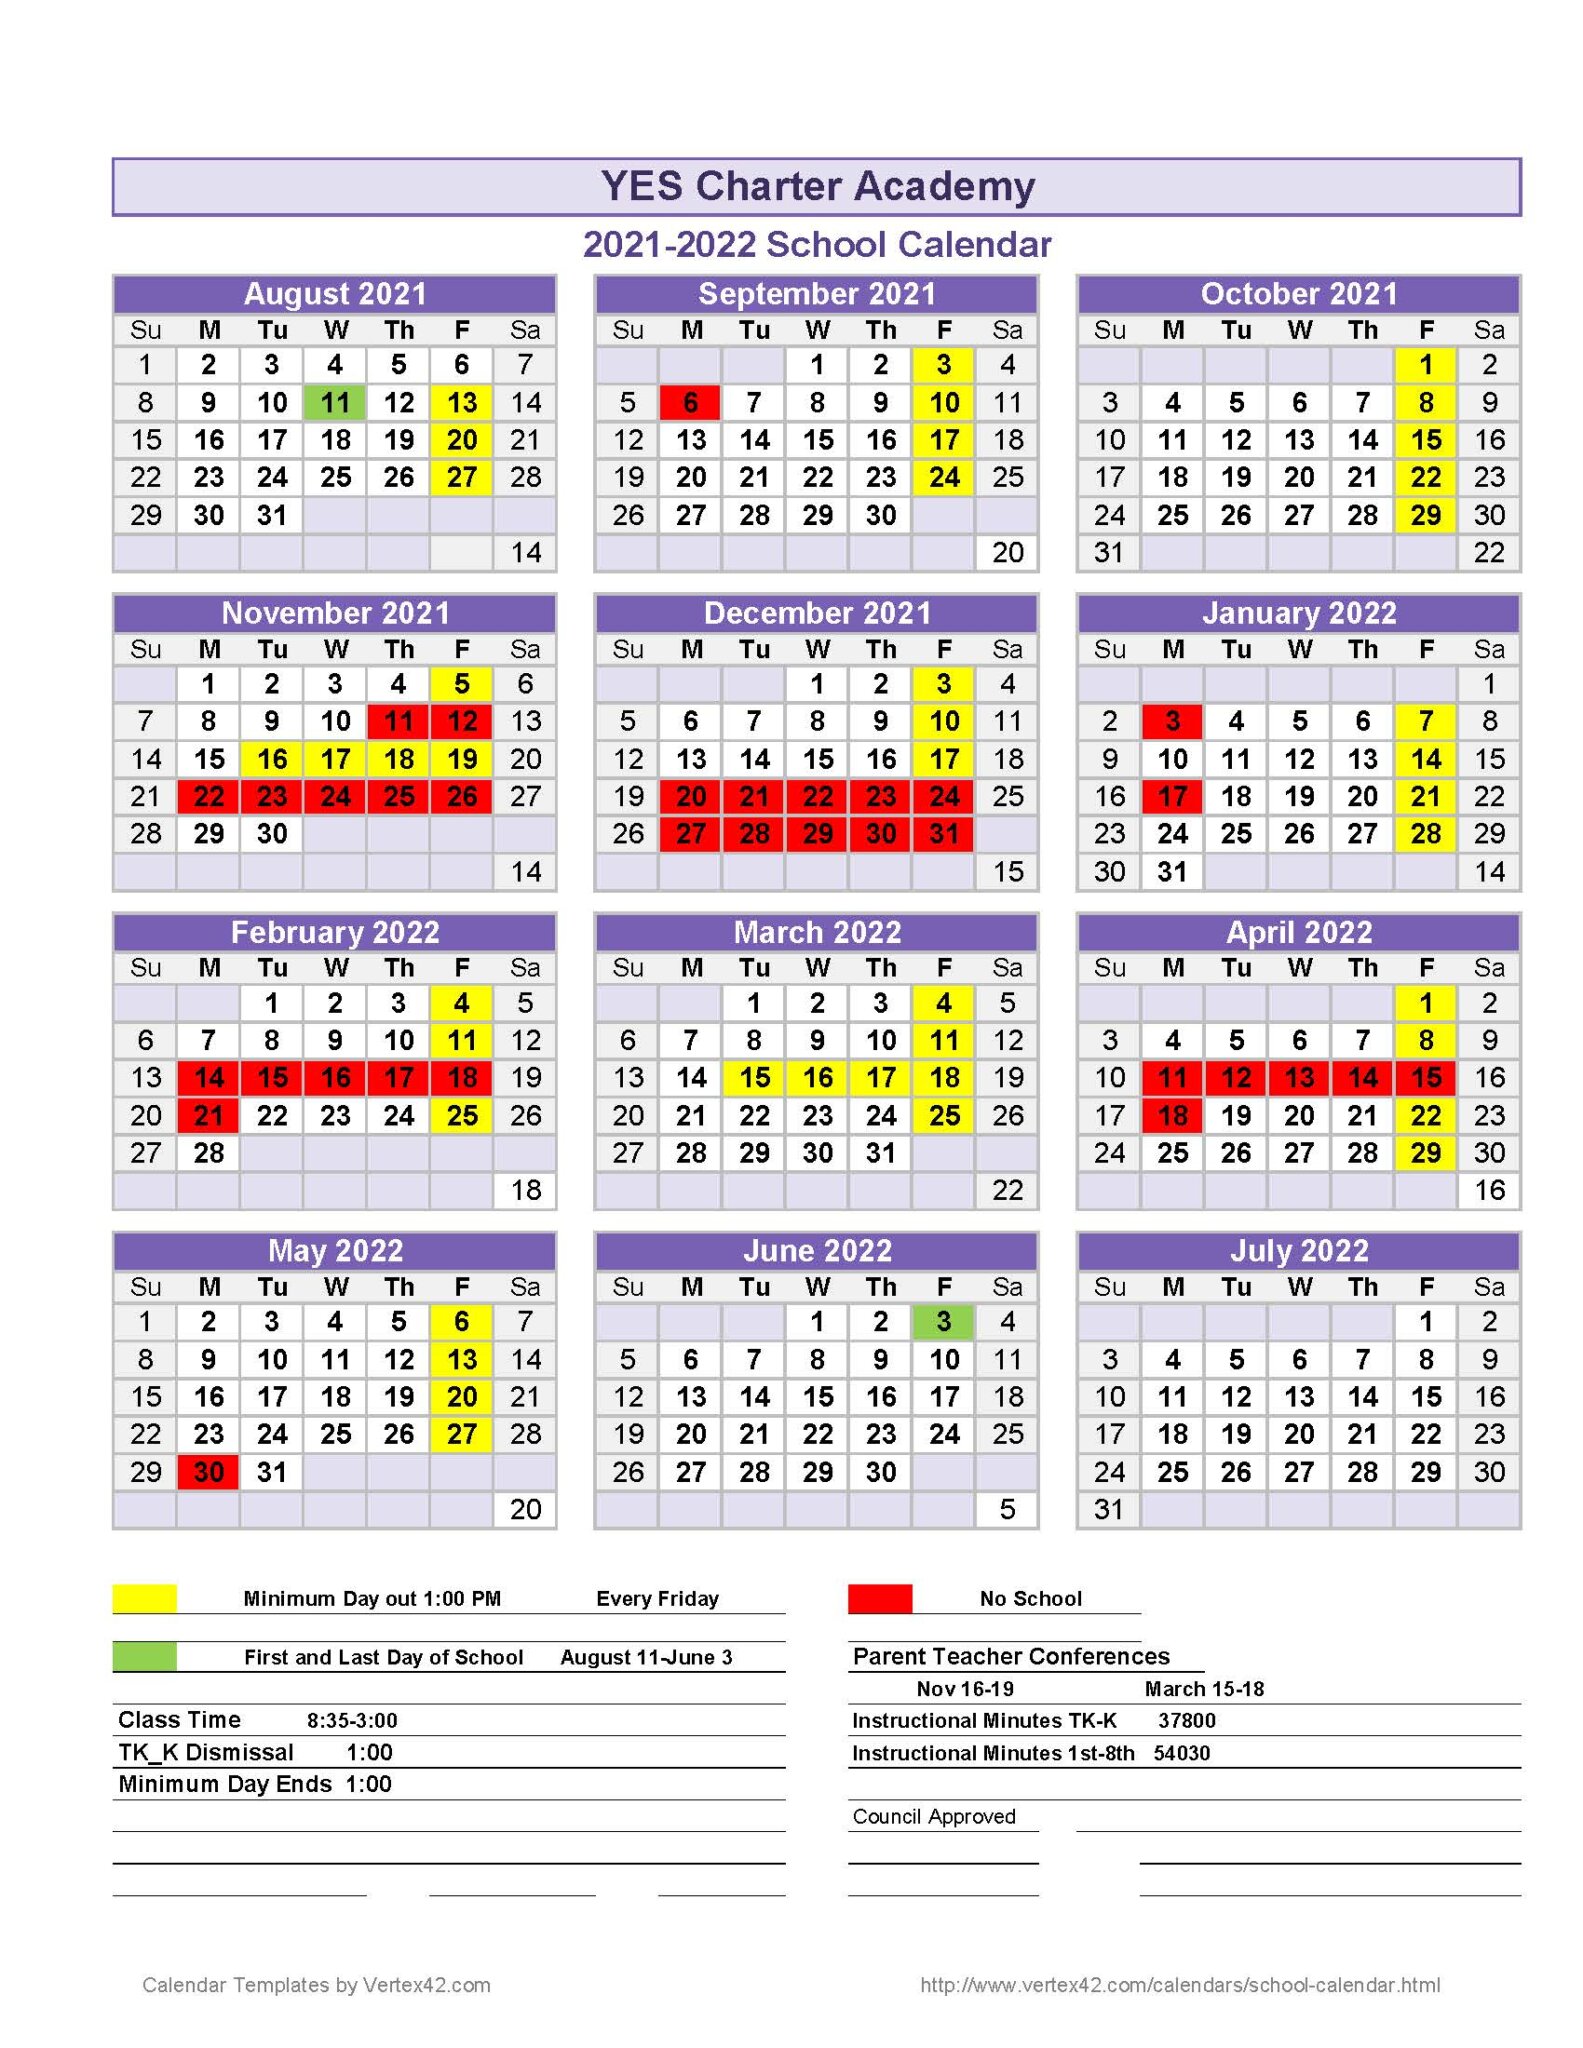 school-calendar-yes-charter-academy